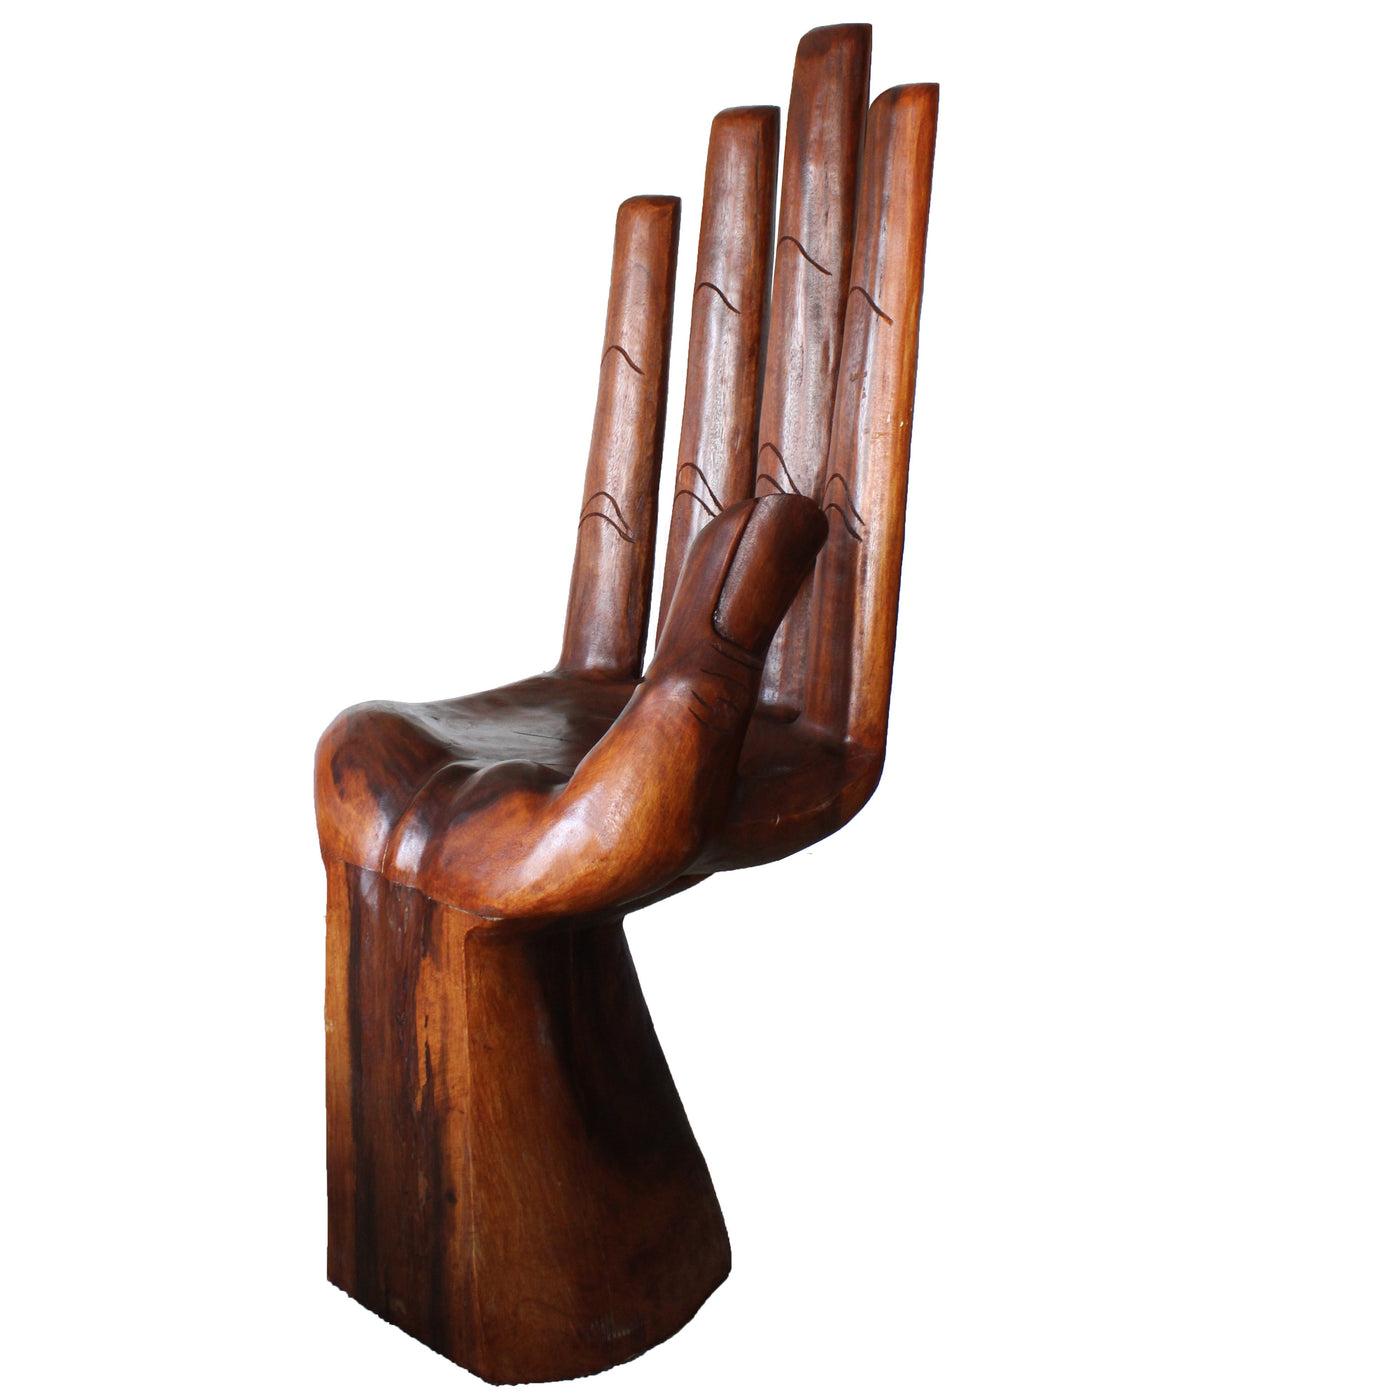 Hand Chair Wood Furniture Chefanie 